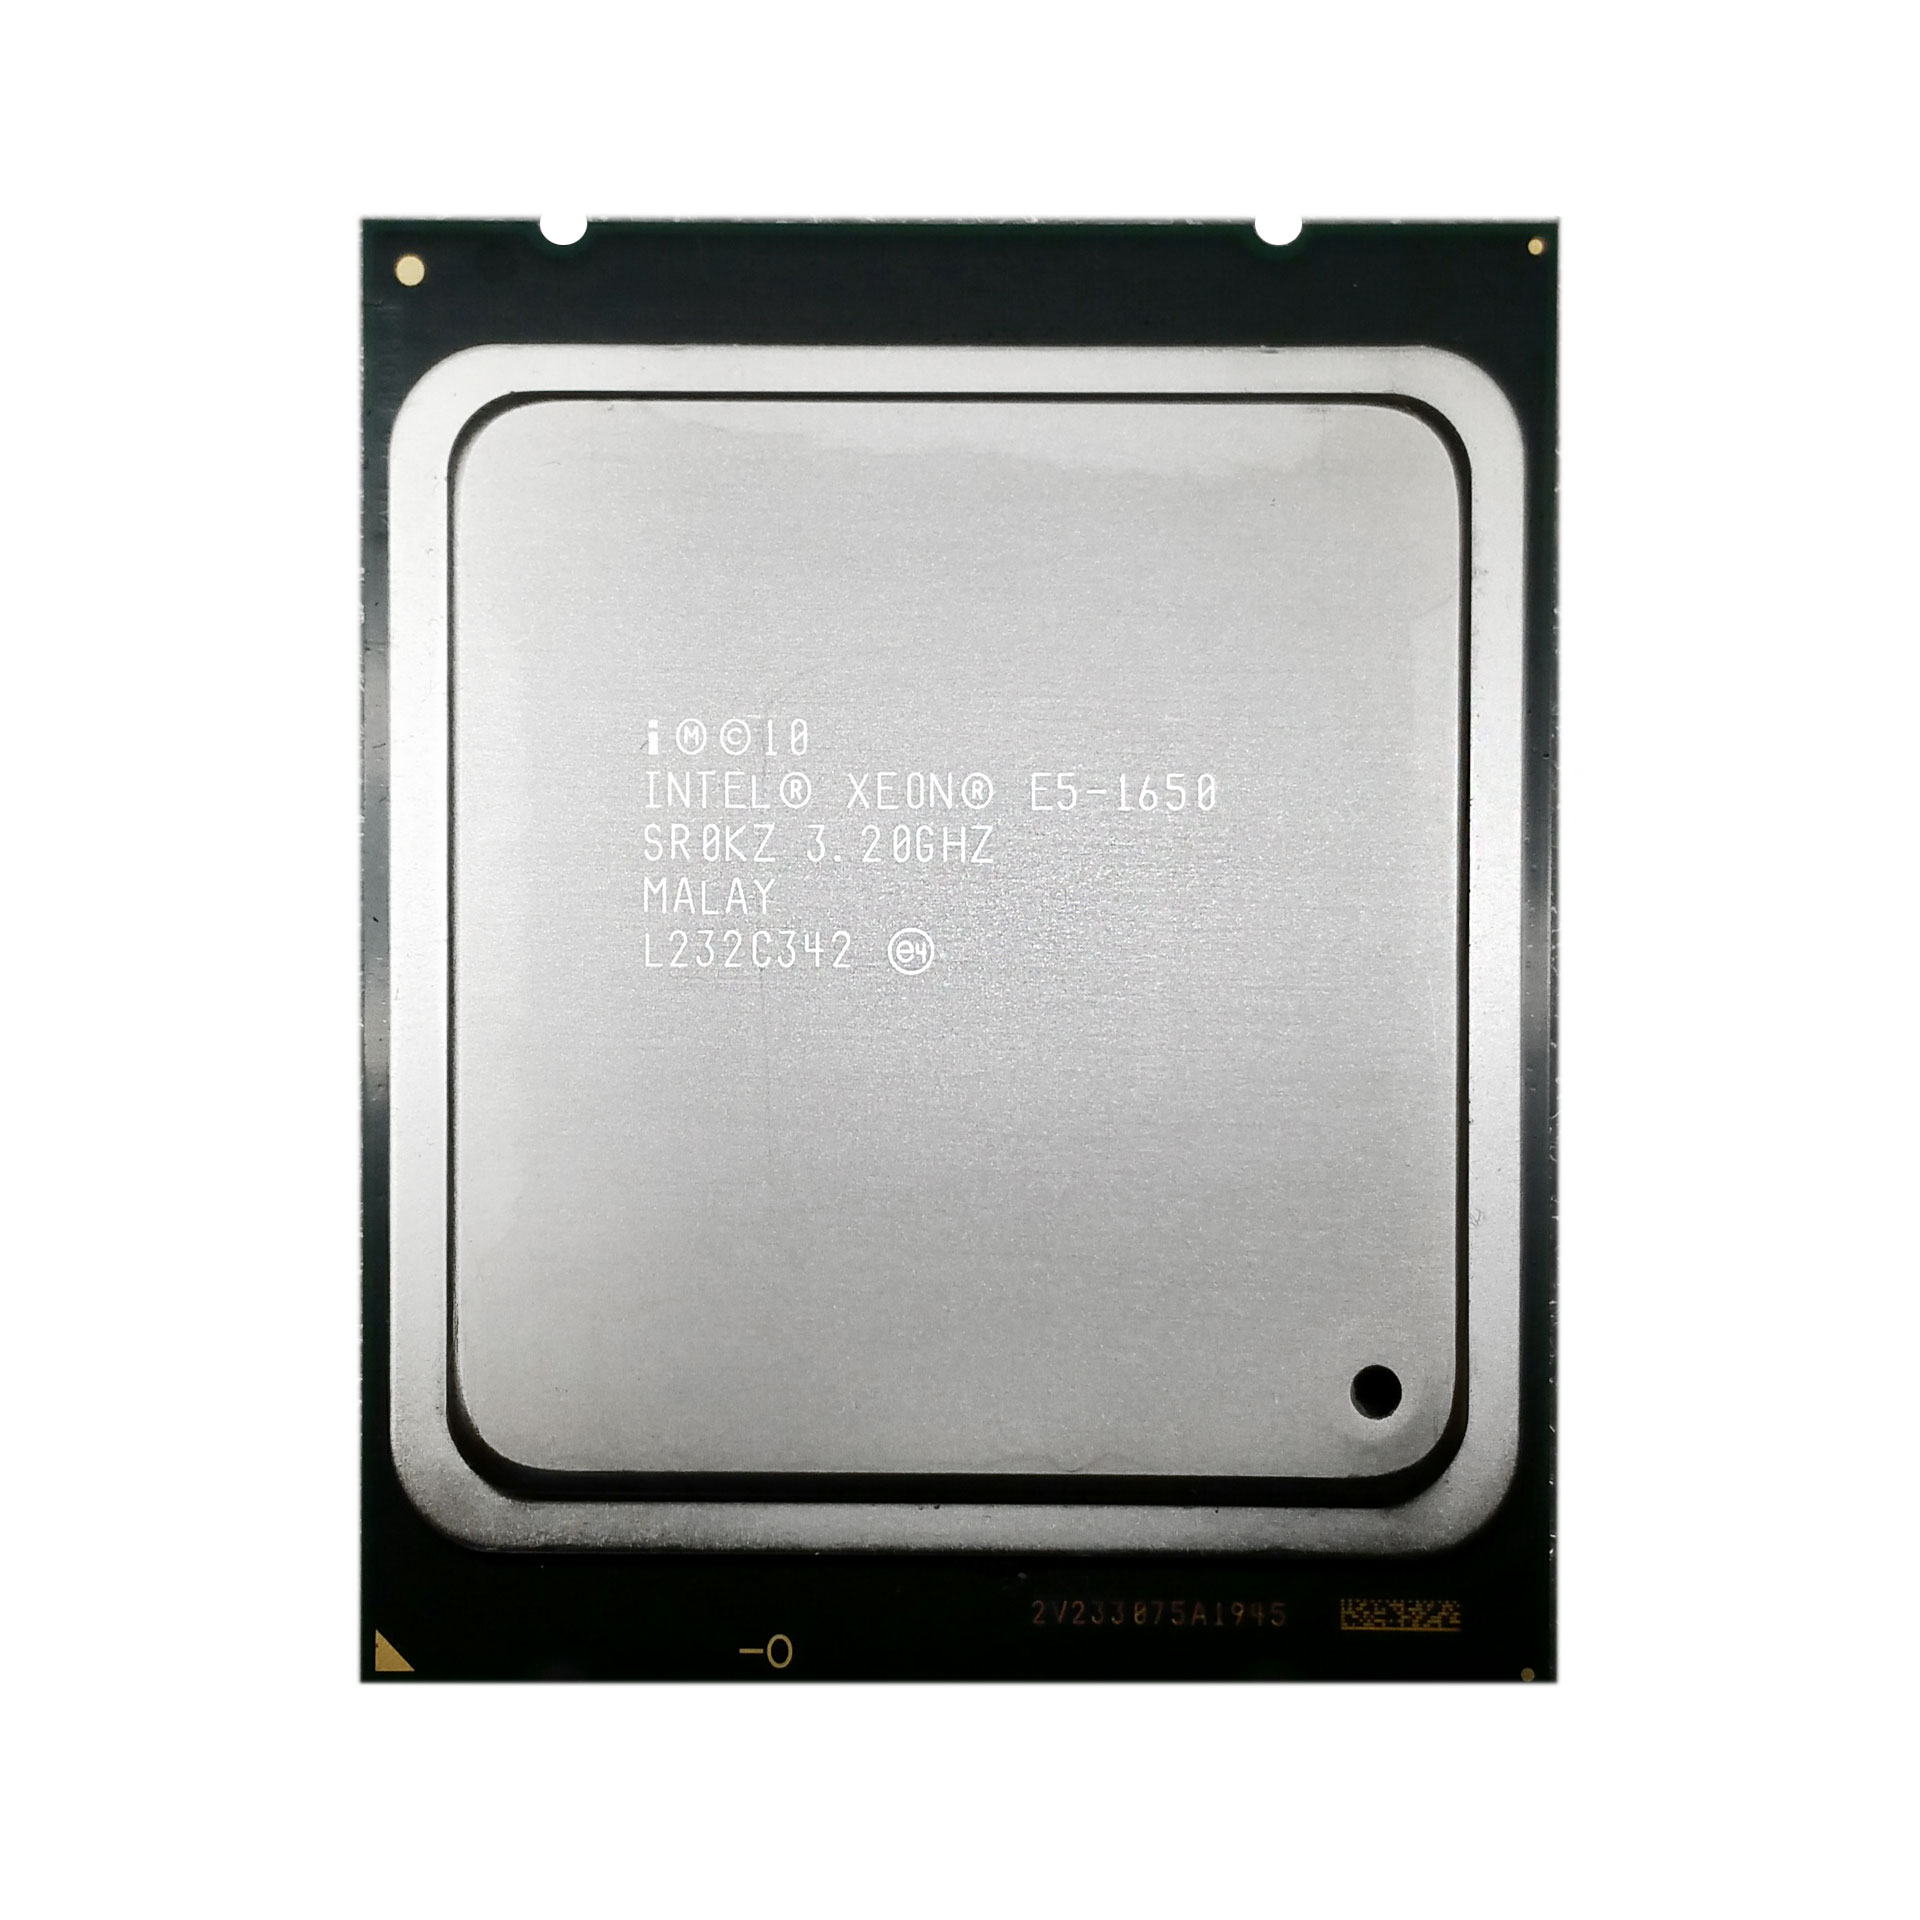 Intel Xeon E5-1650 3.2GHz 6-core 12MB LGA 2011 Processor SR0KZ